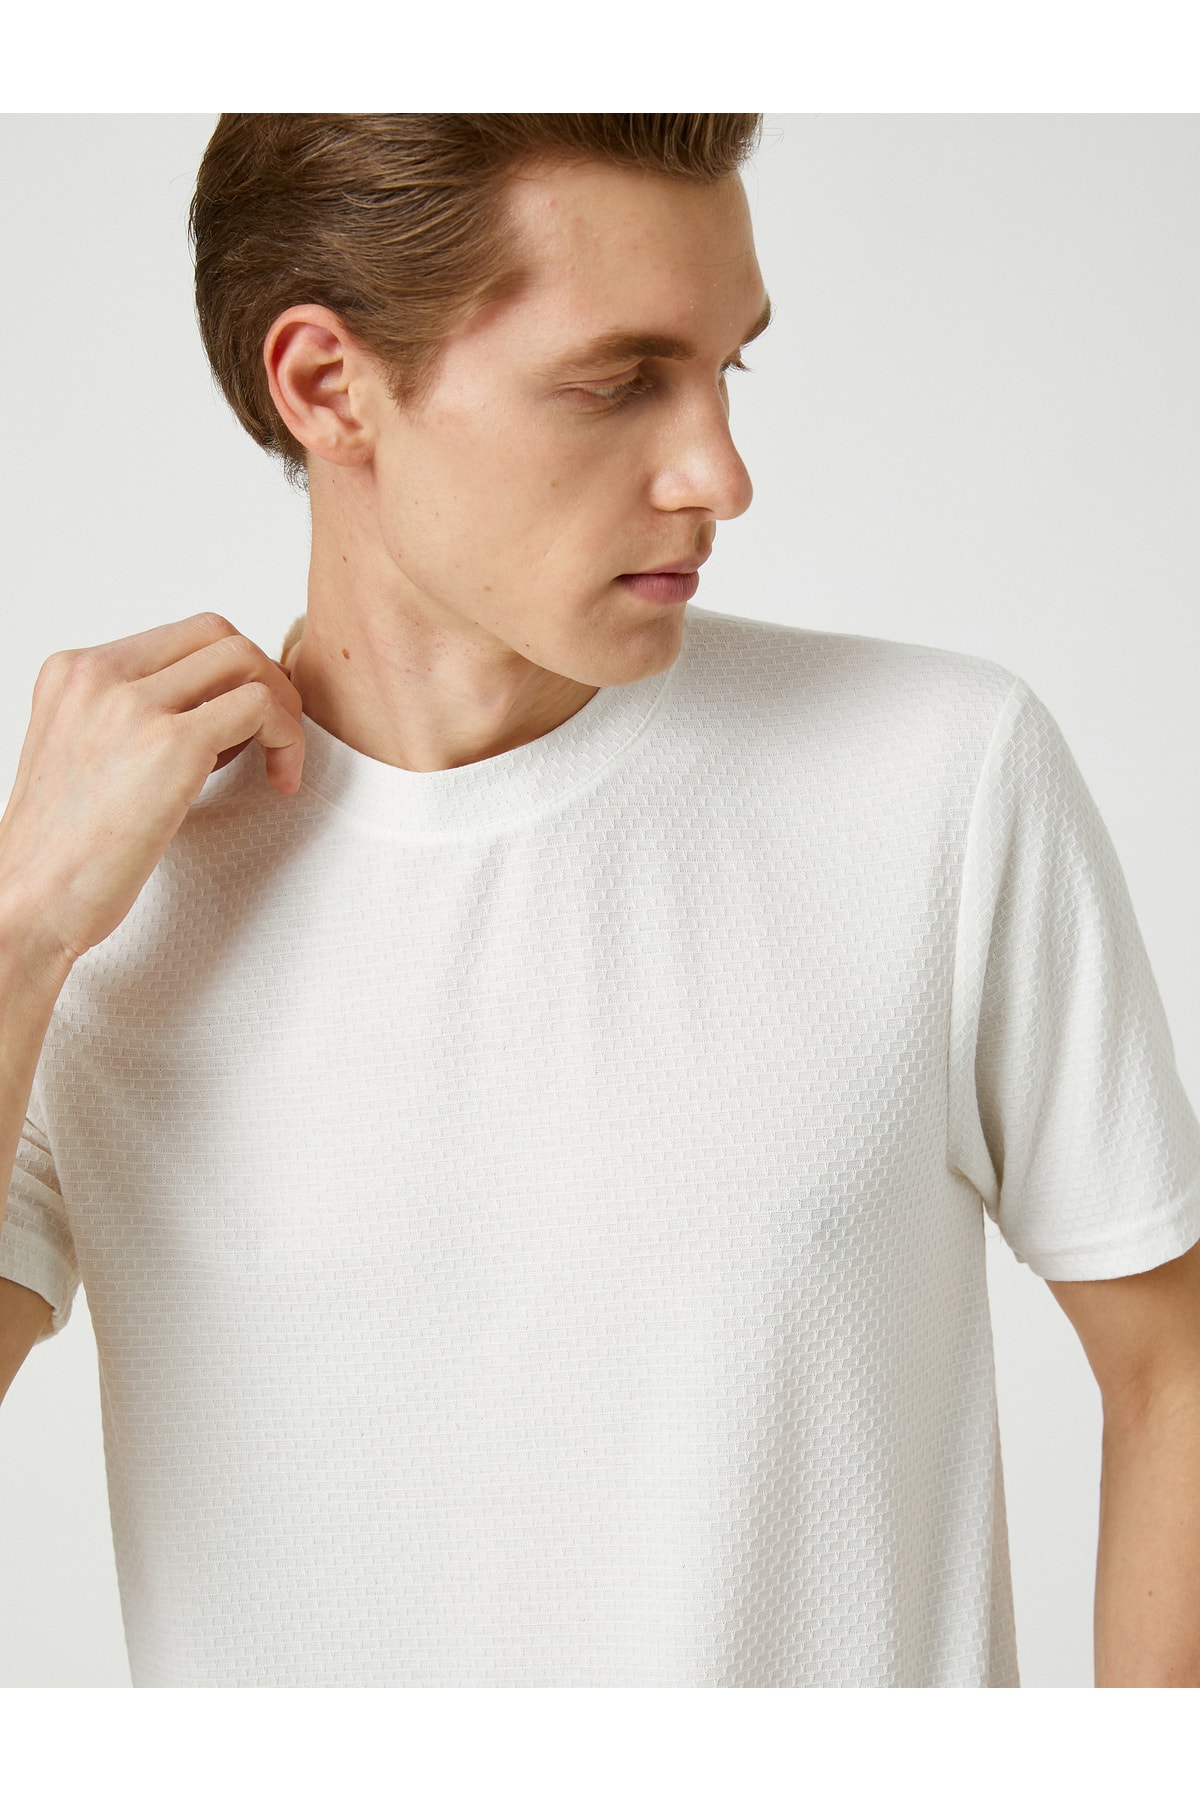 Tričko Koton Basic. Textúrovaný krk posádky krátke rukávy, slim fit.